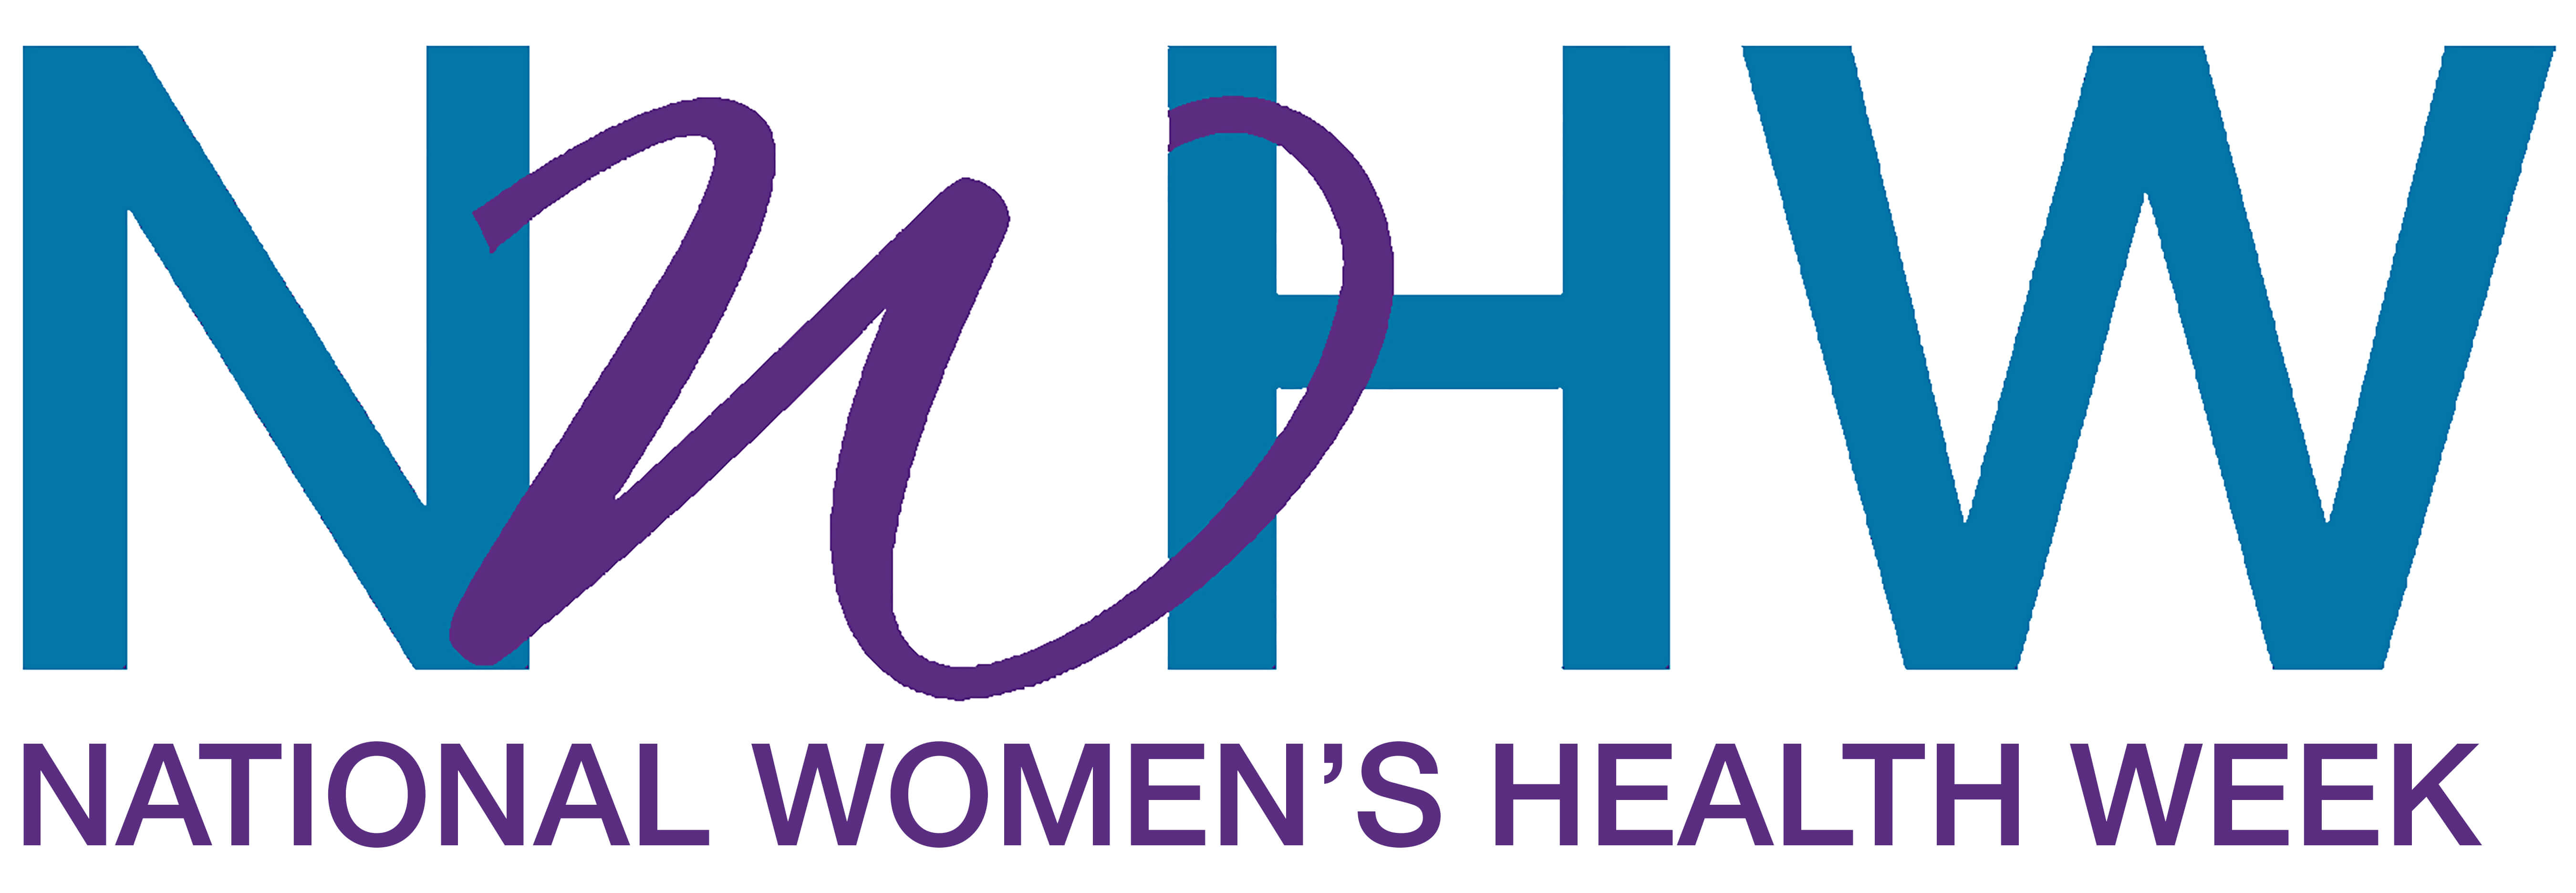 National Women's Health Week 2019